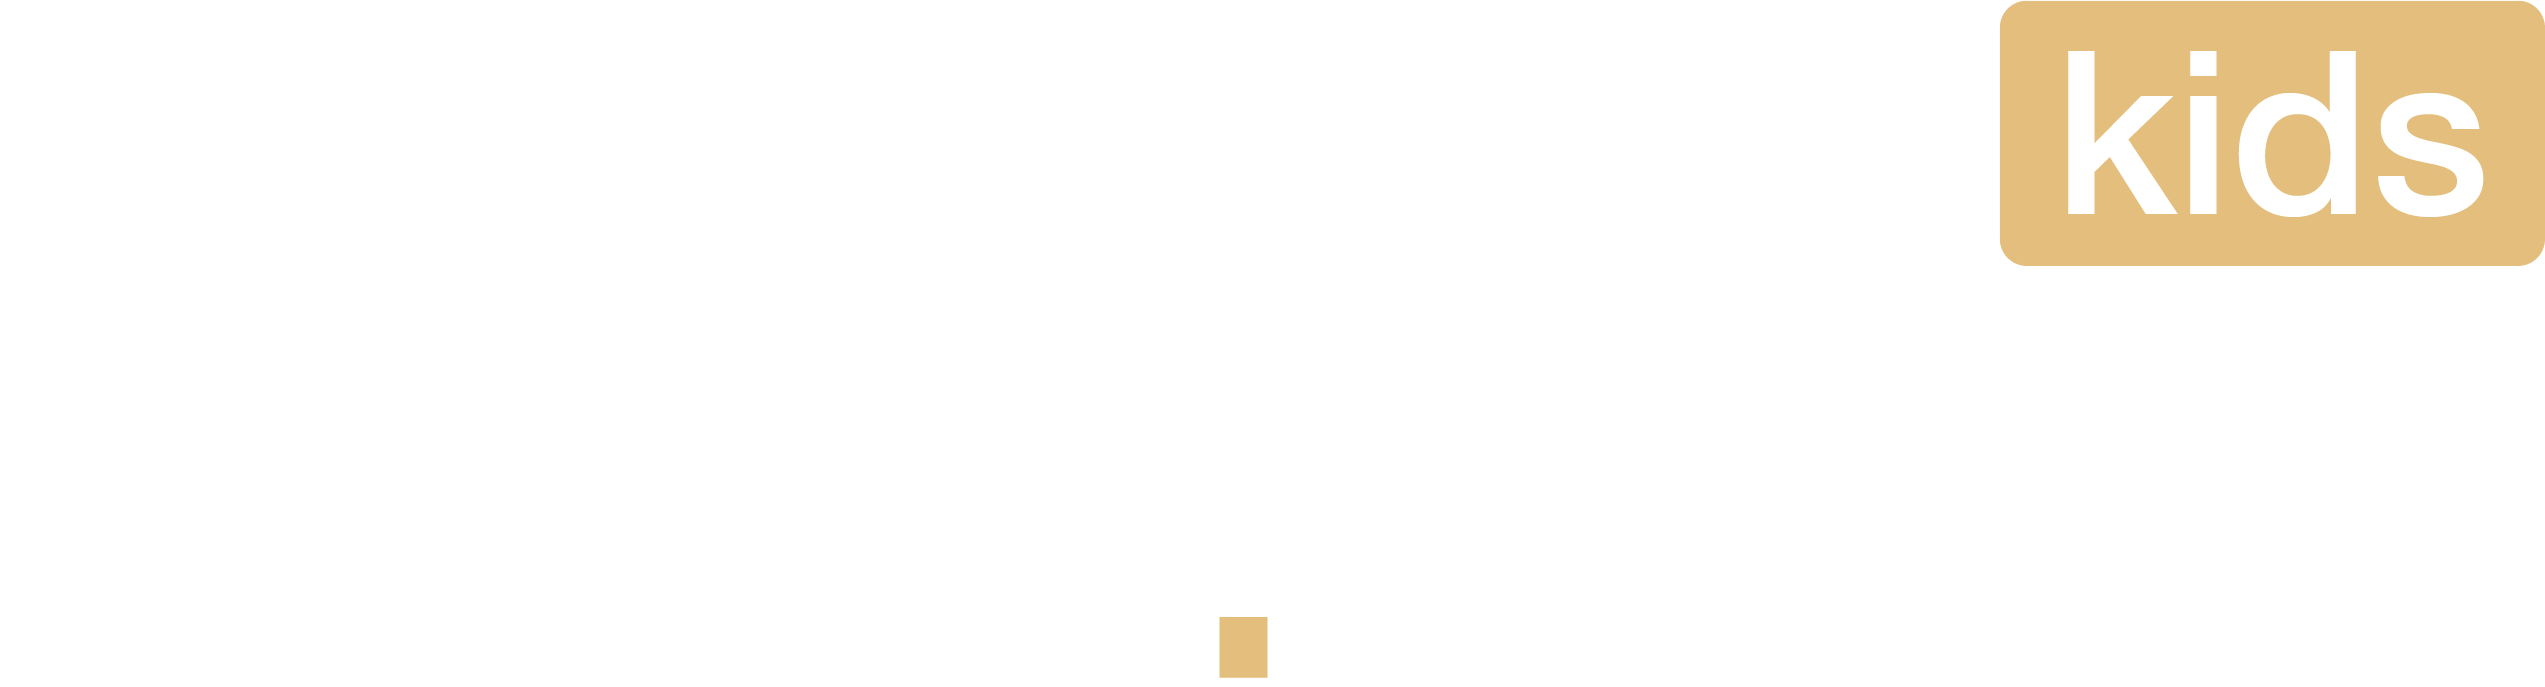 zahn-liebe-kids-logo